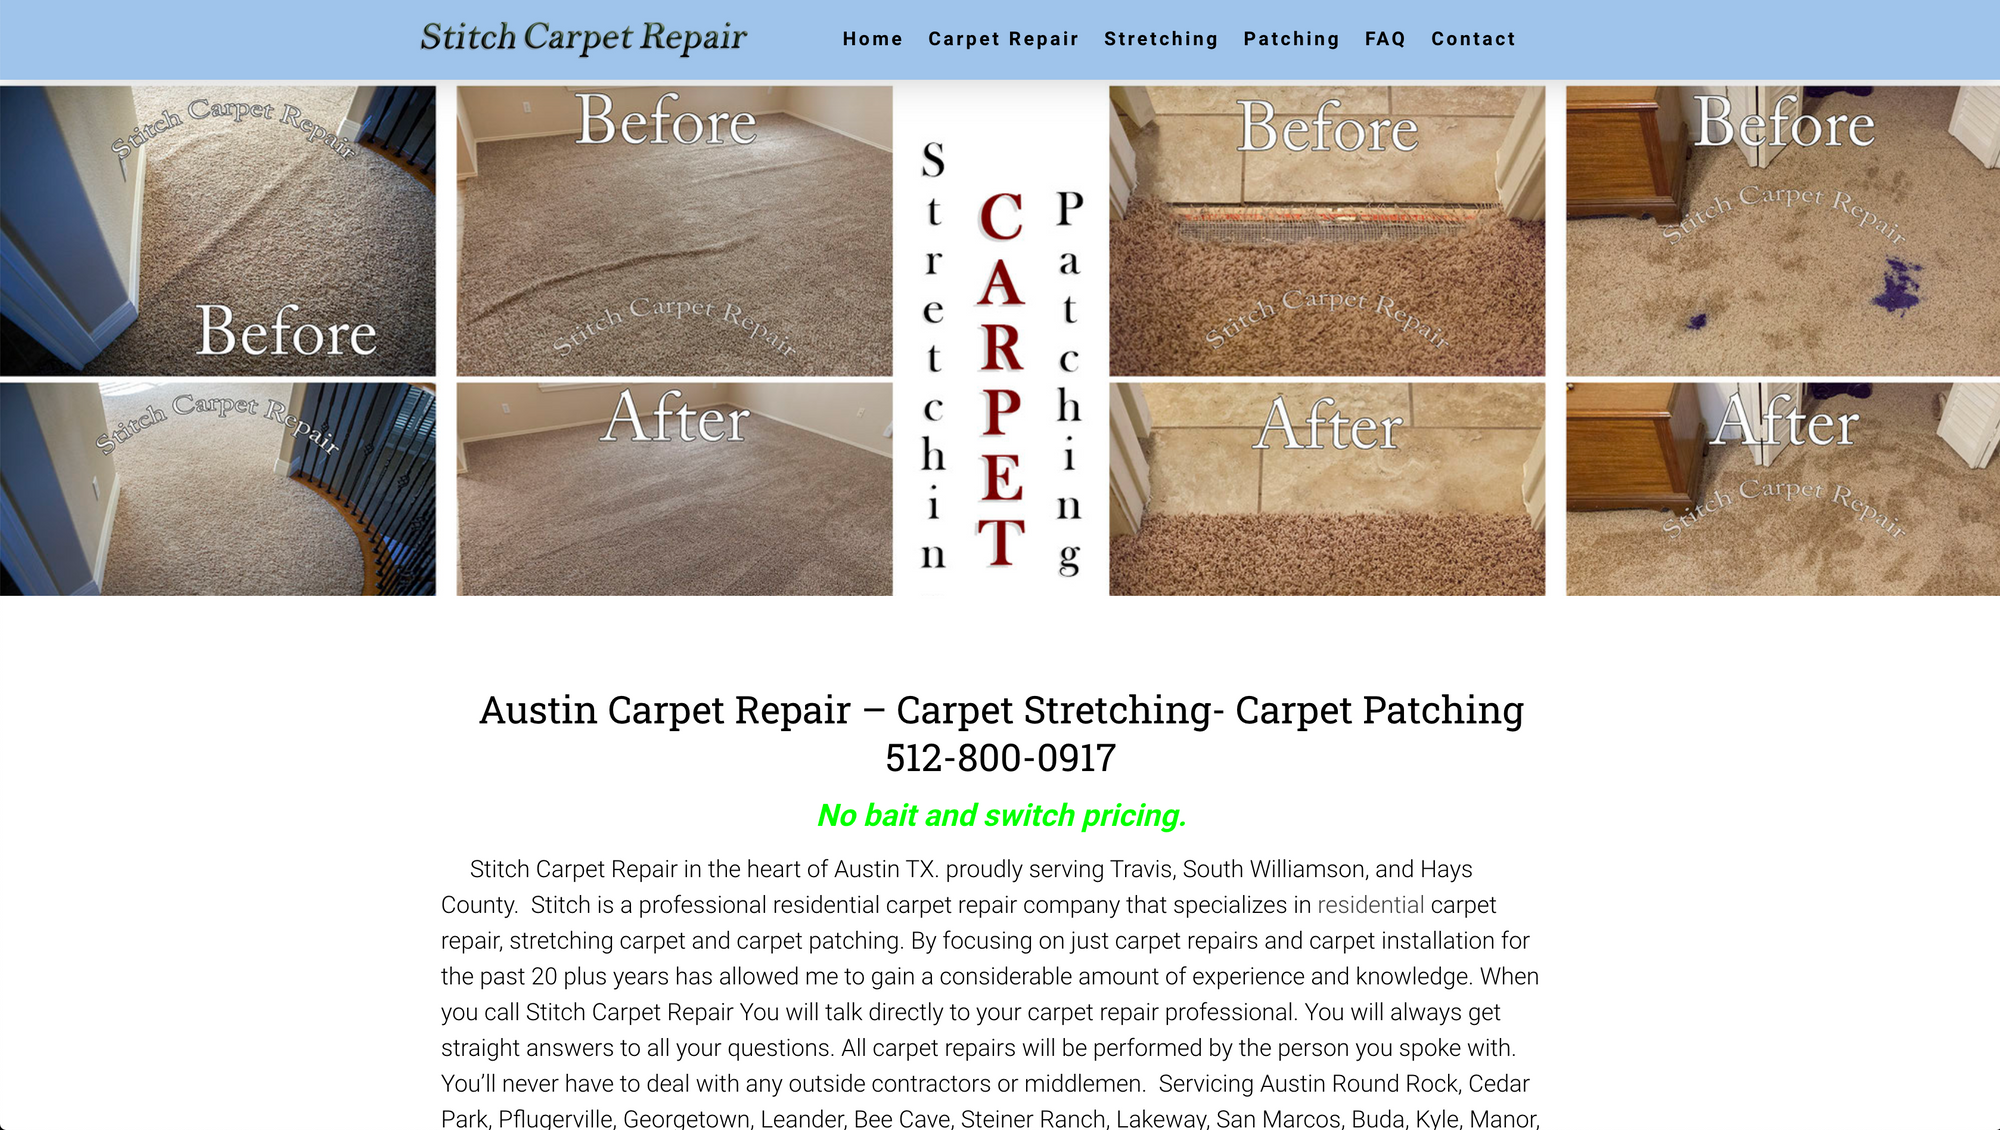 Stitch Carpet Repair